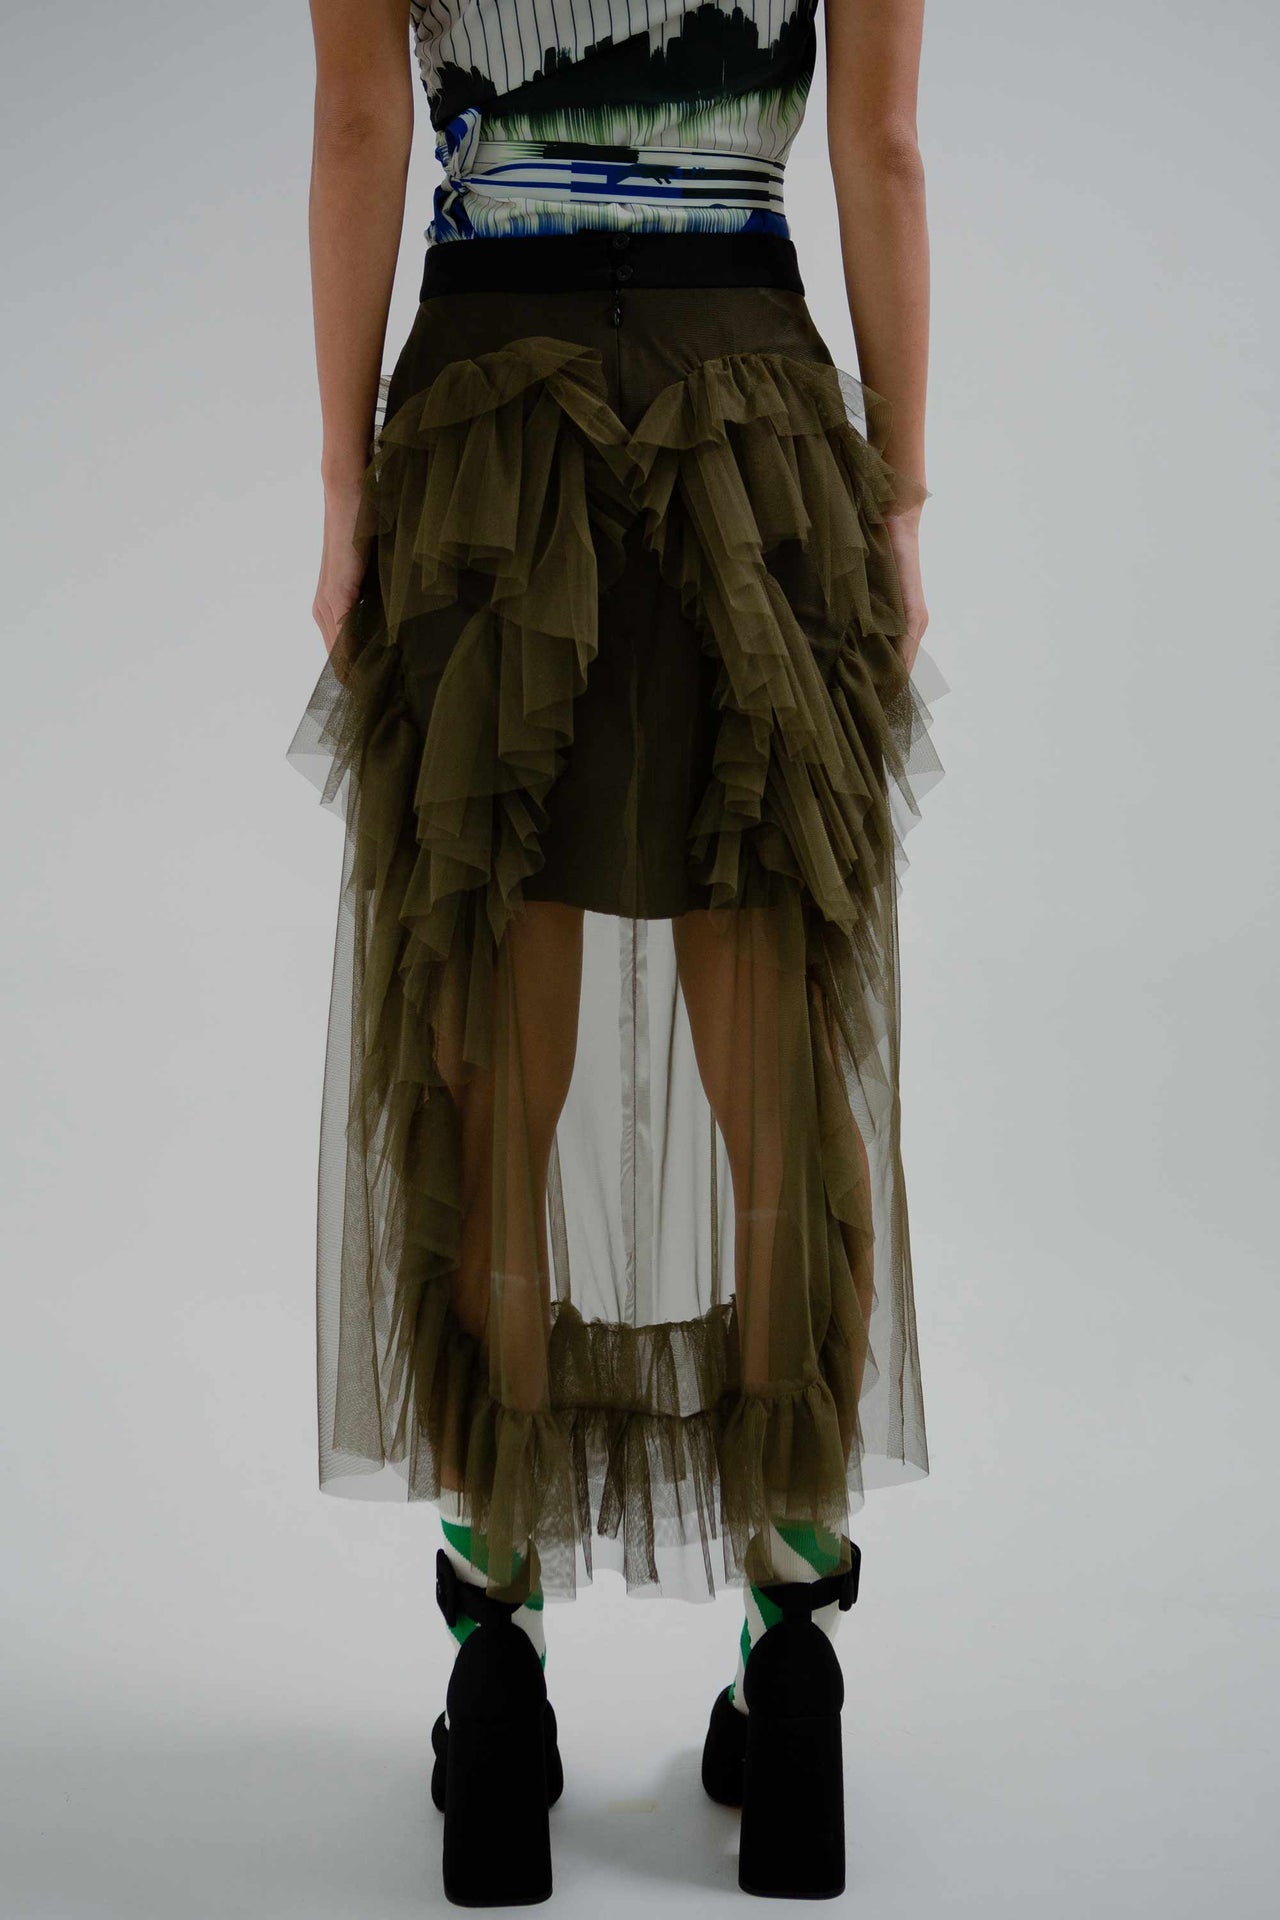 Undulating Tulle Skirt (Olive)